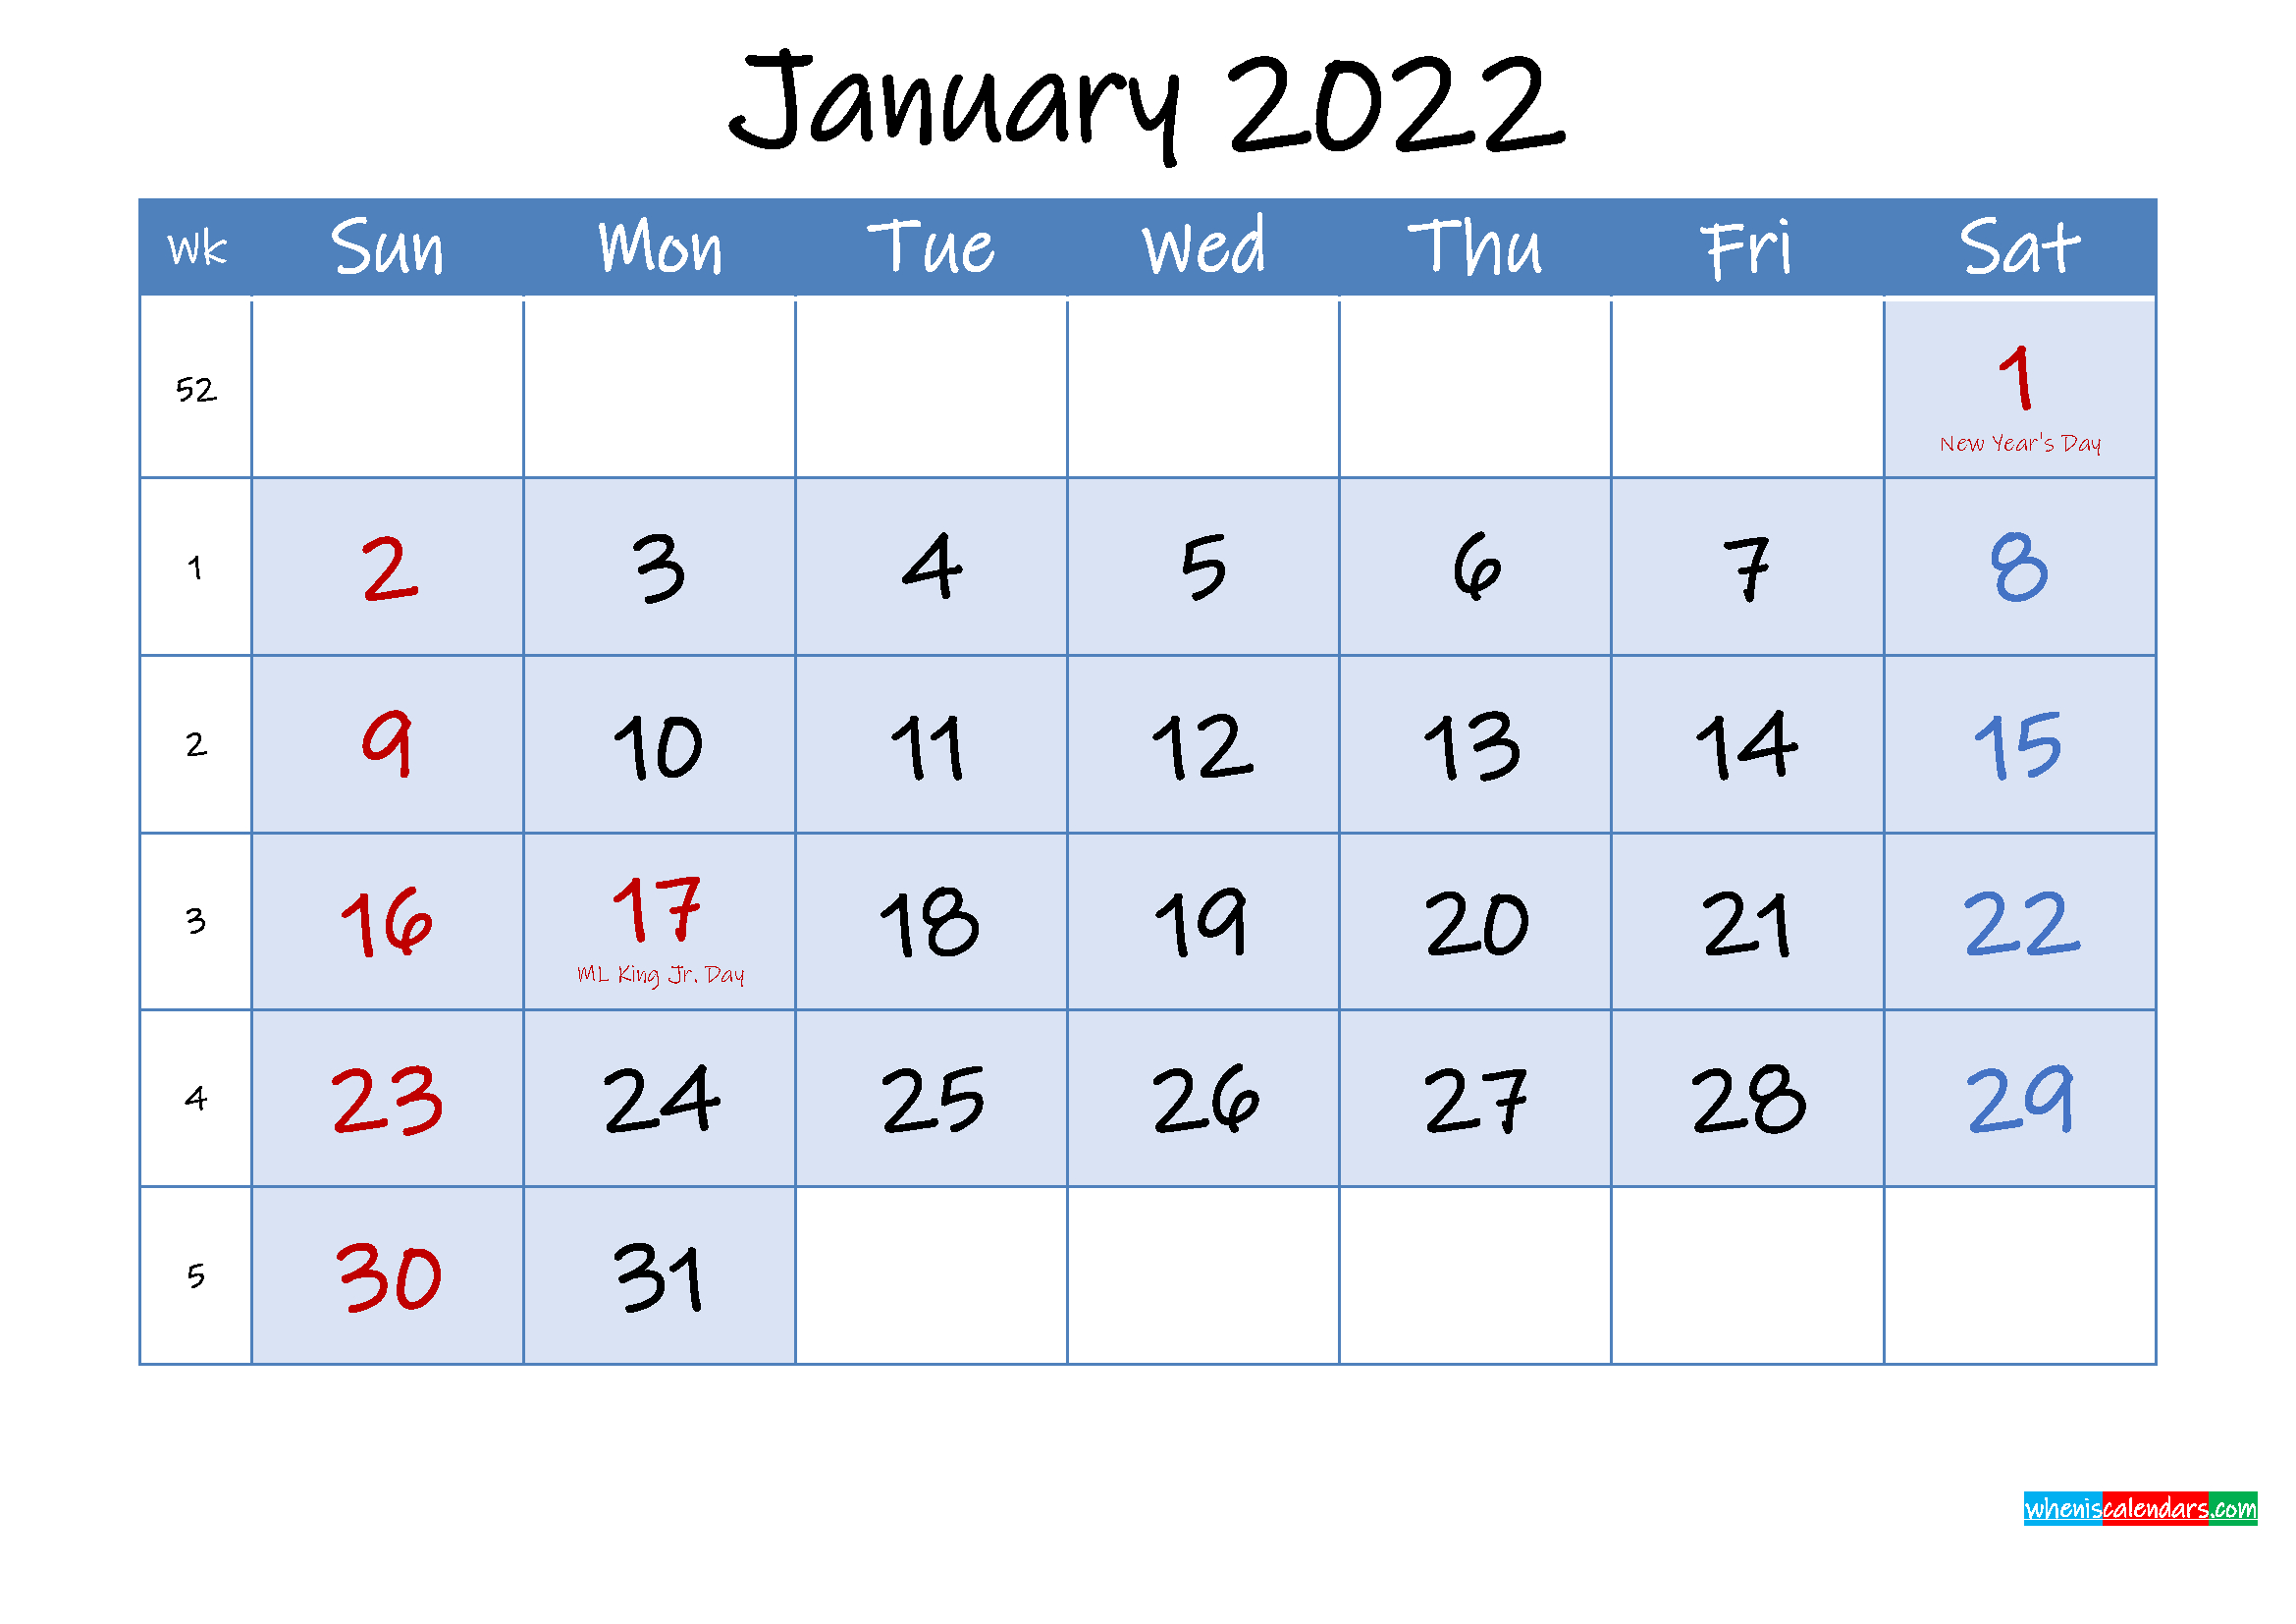 Free Printable January 2022 Calendar - Template Ink22M97 | Free Printable 2020 Calendar With